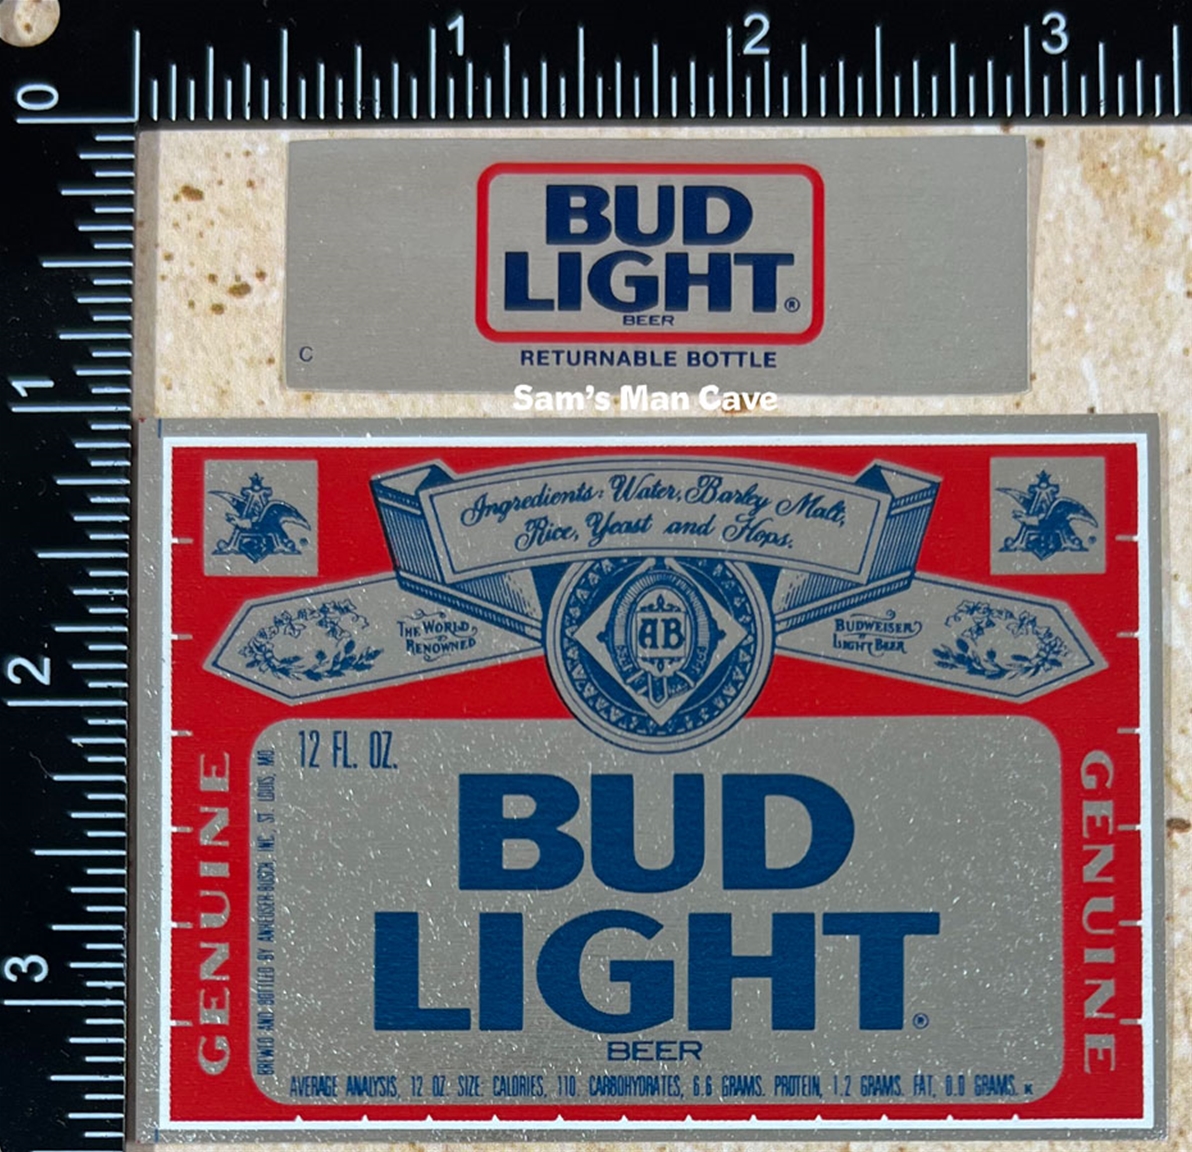 Bud Light Beer Label with neck label